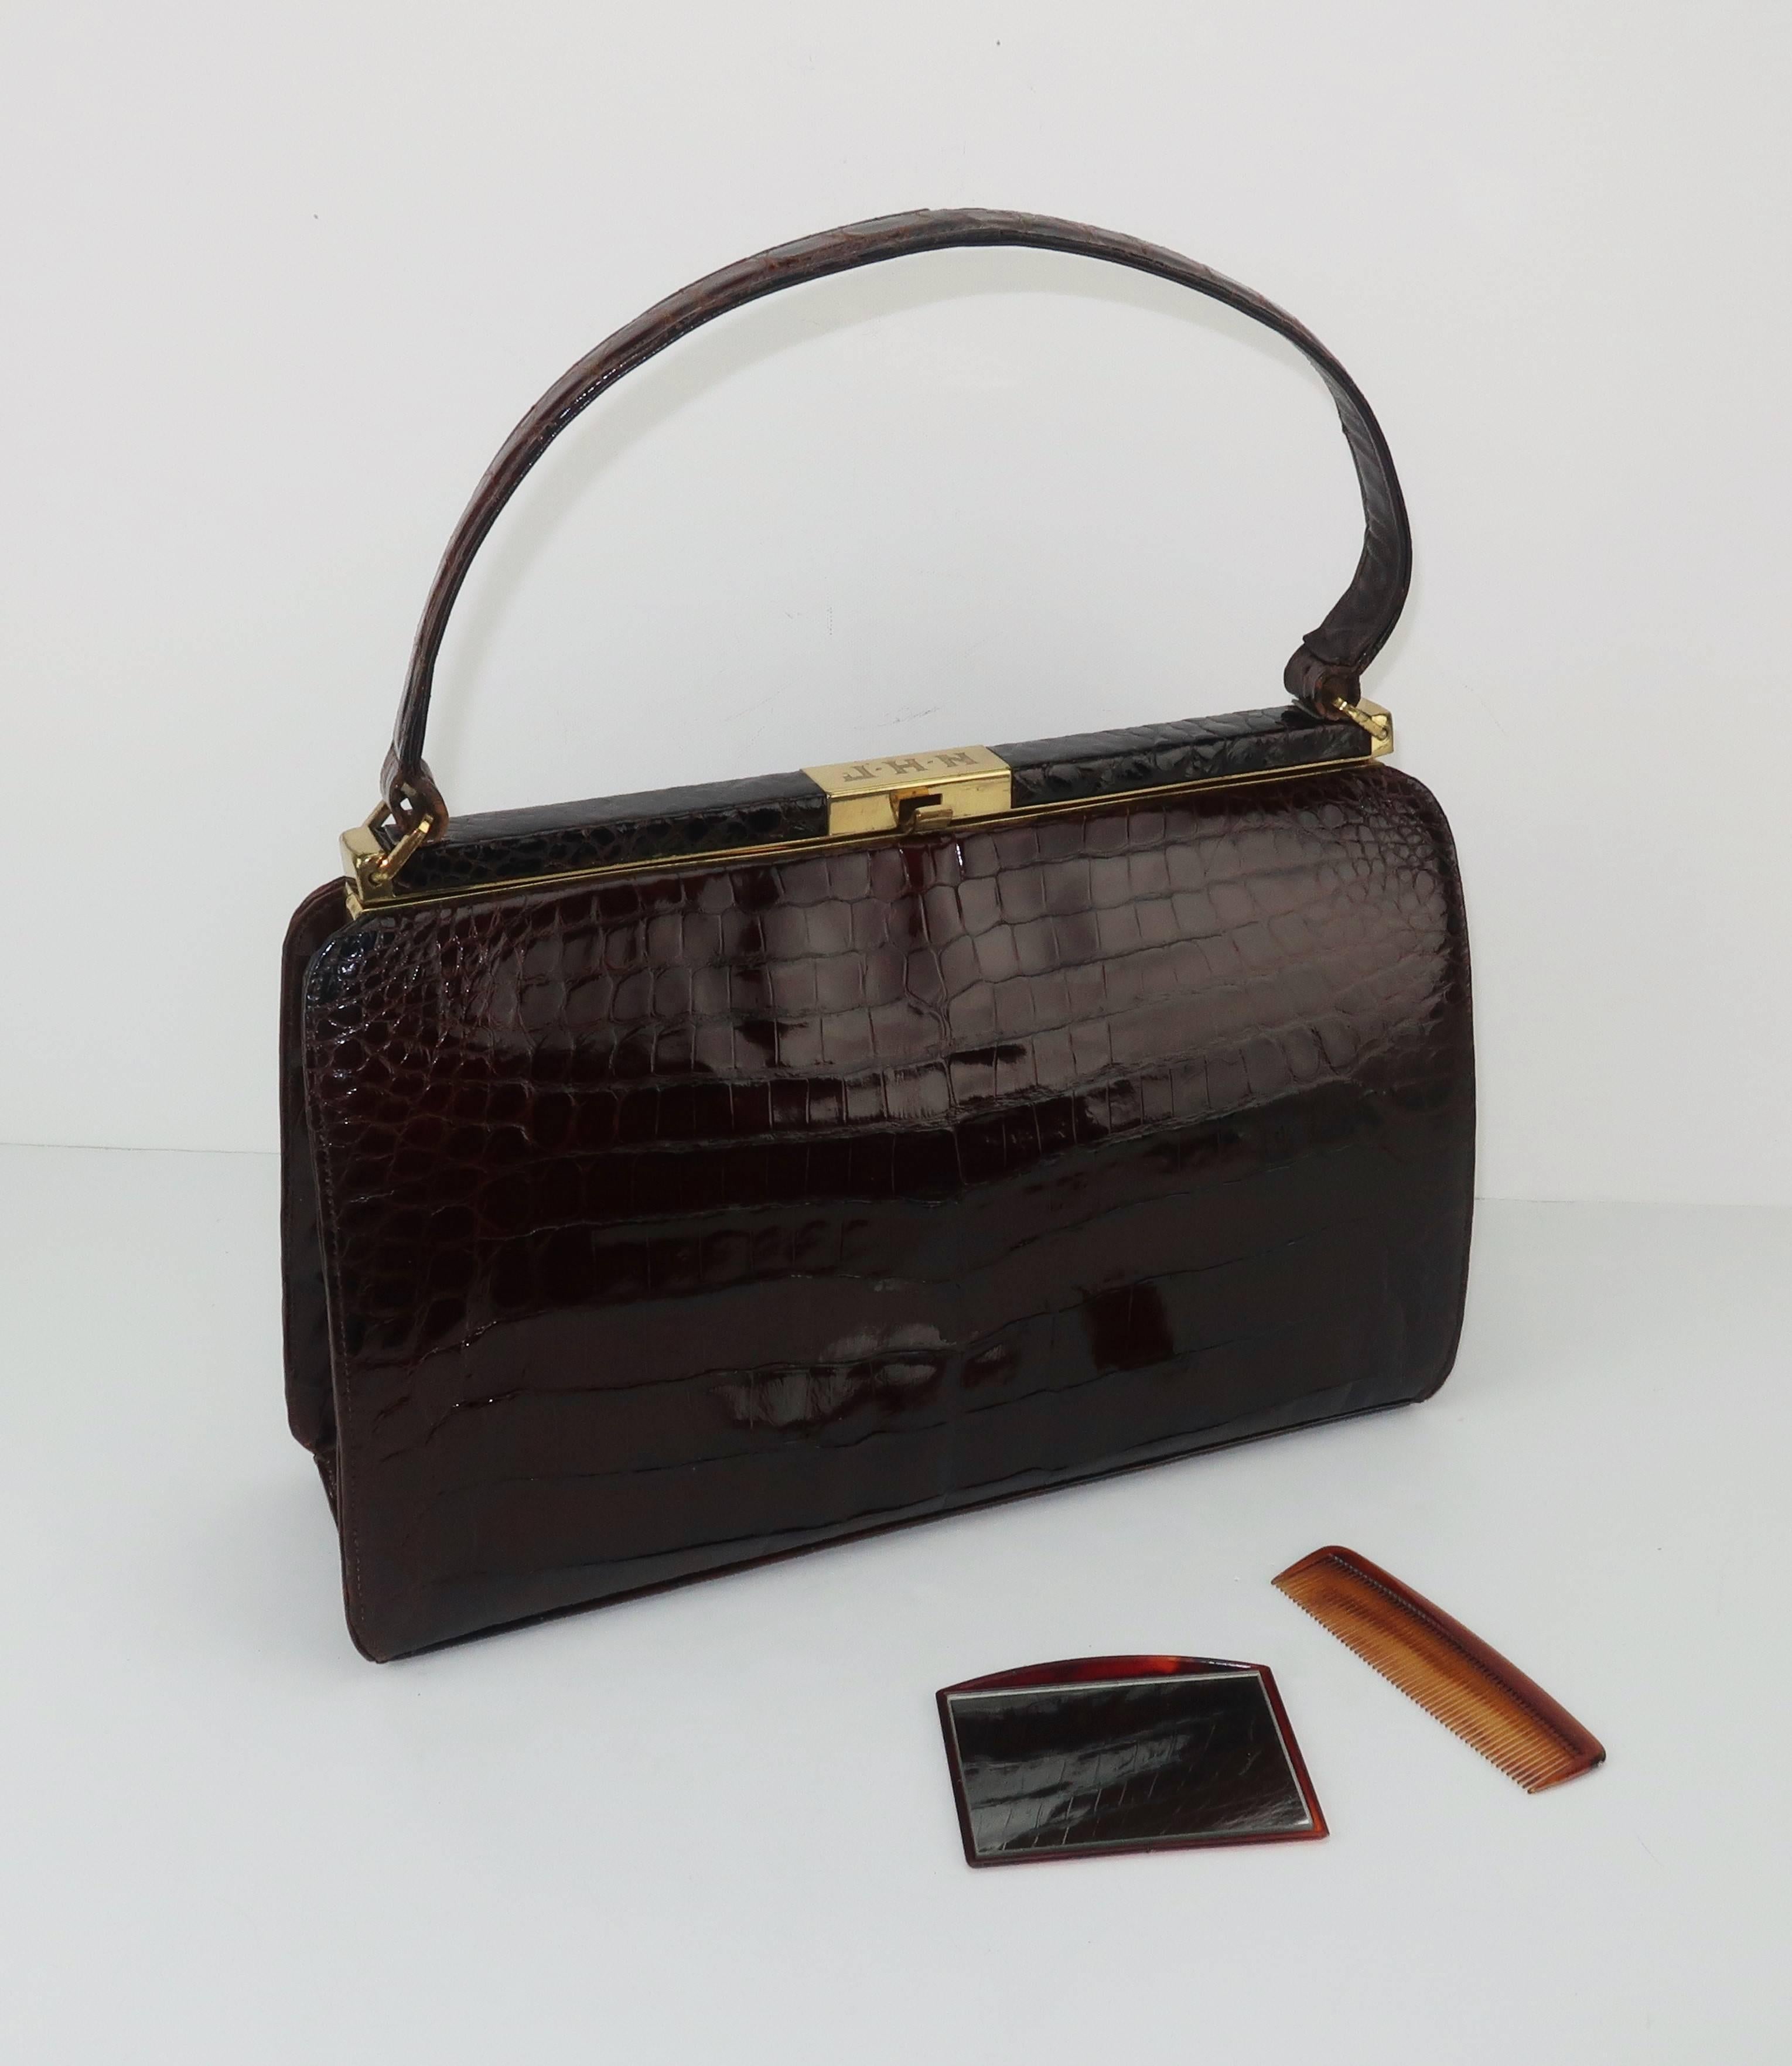 bellestone handbags history